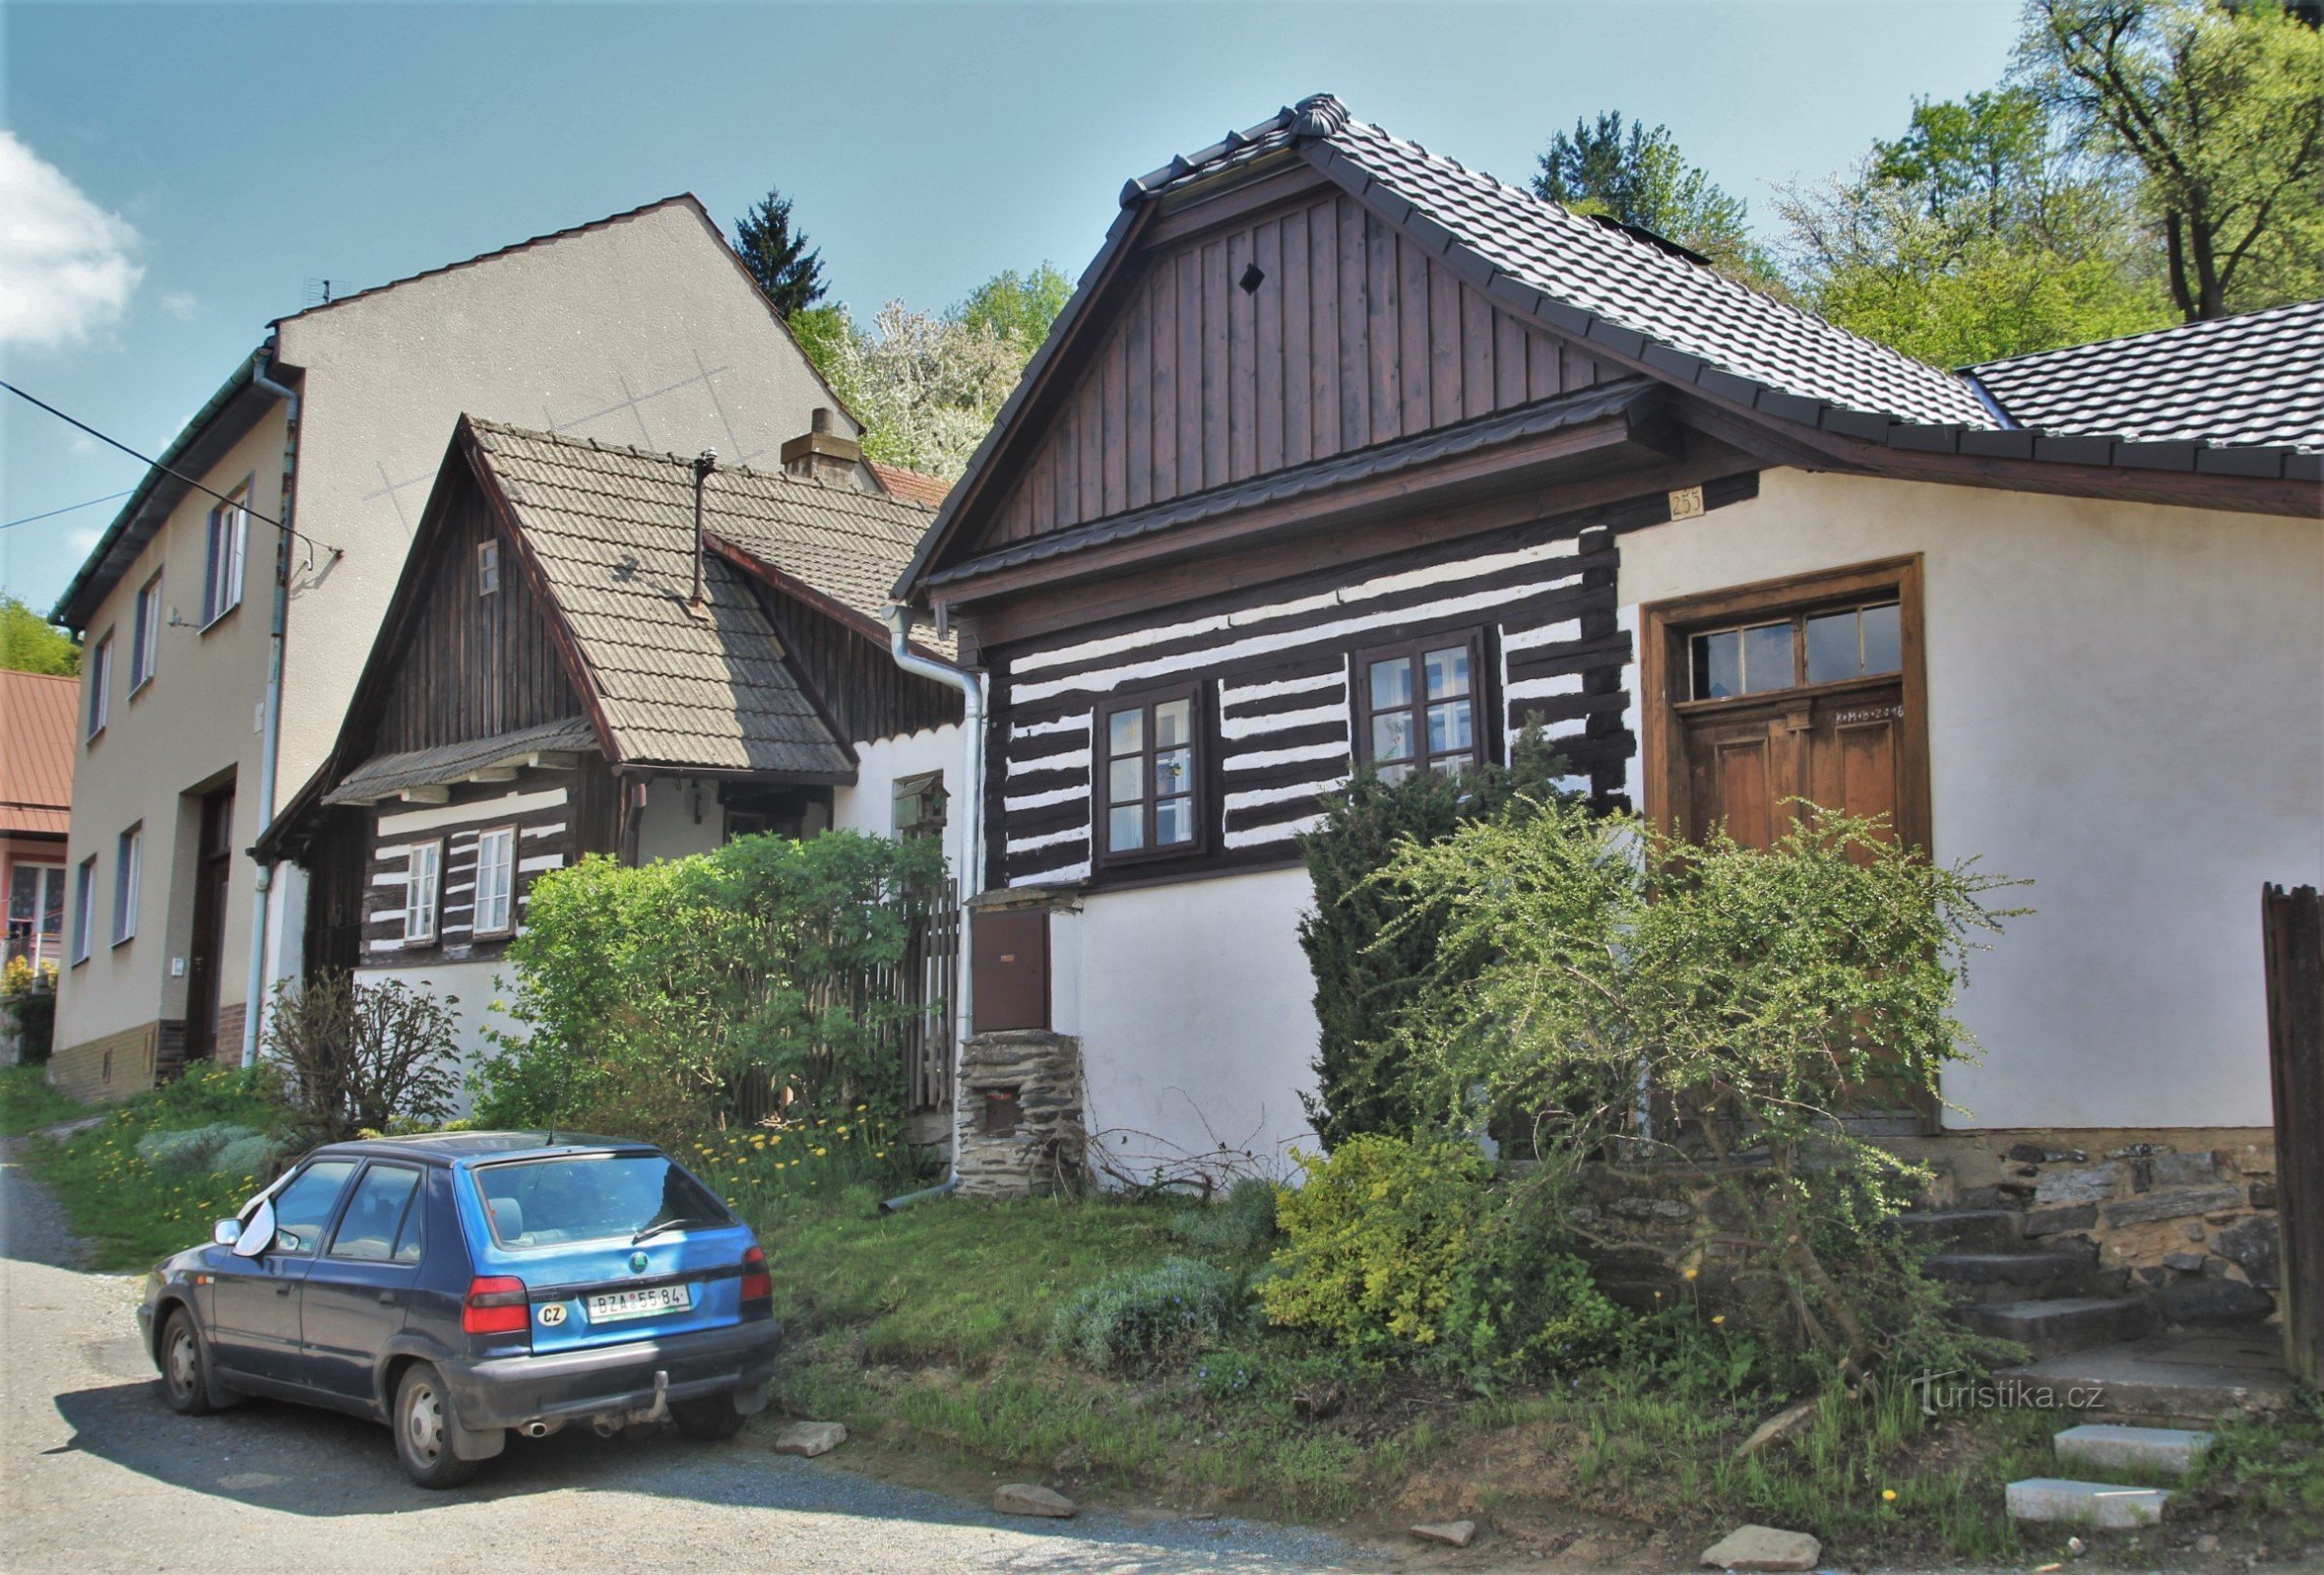 Olešnice - drewniany dom w miejscowości Horní Vejpustek